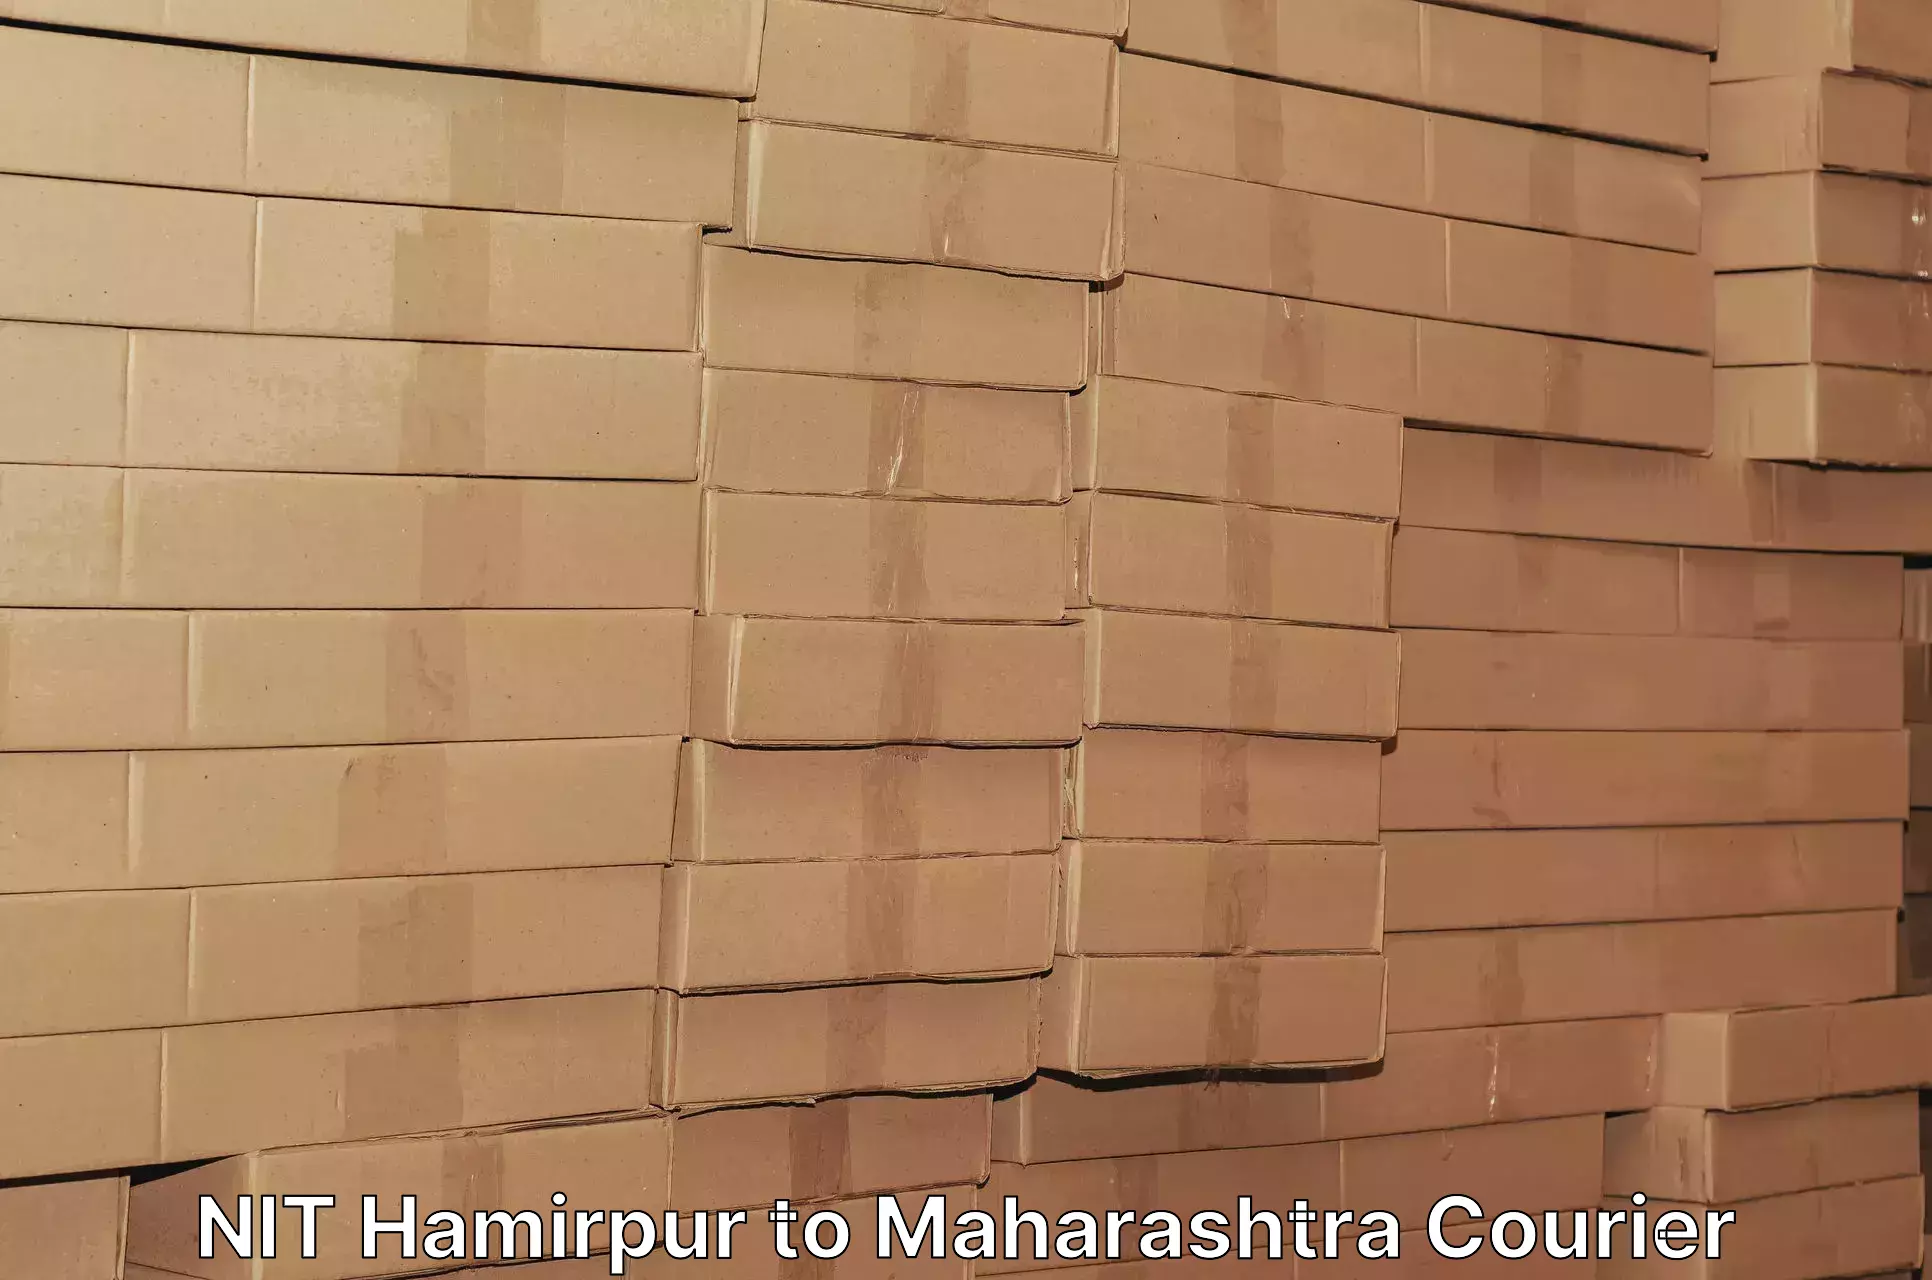 User-friendly courier app NIT Hamirpur to Khandala Pune